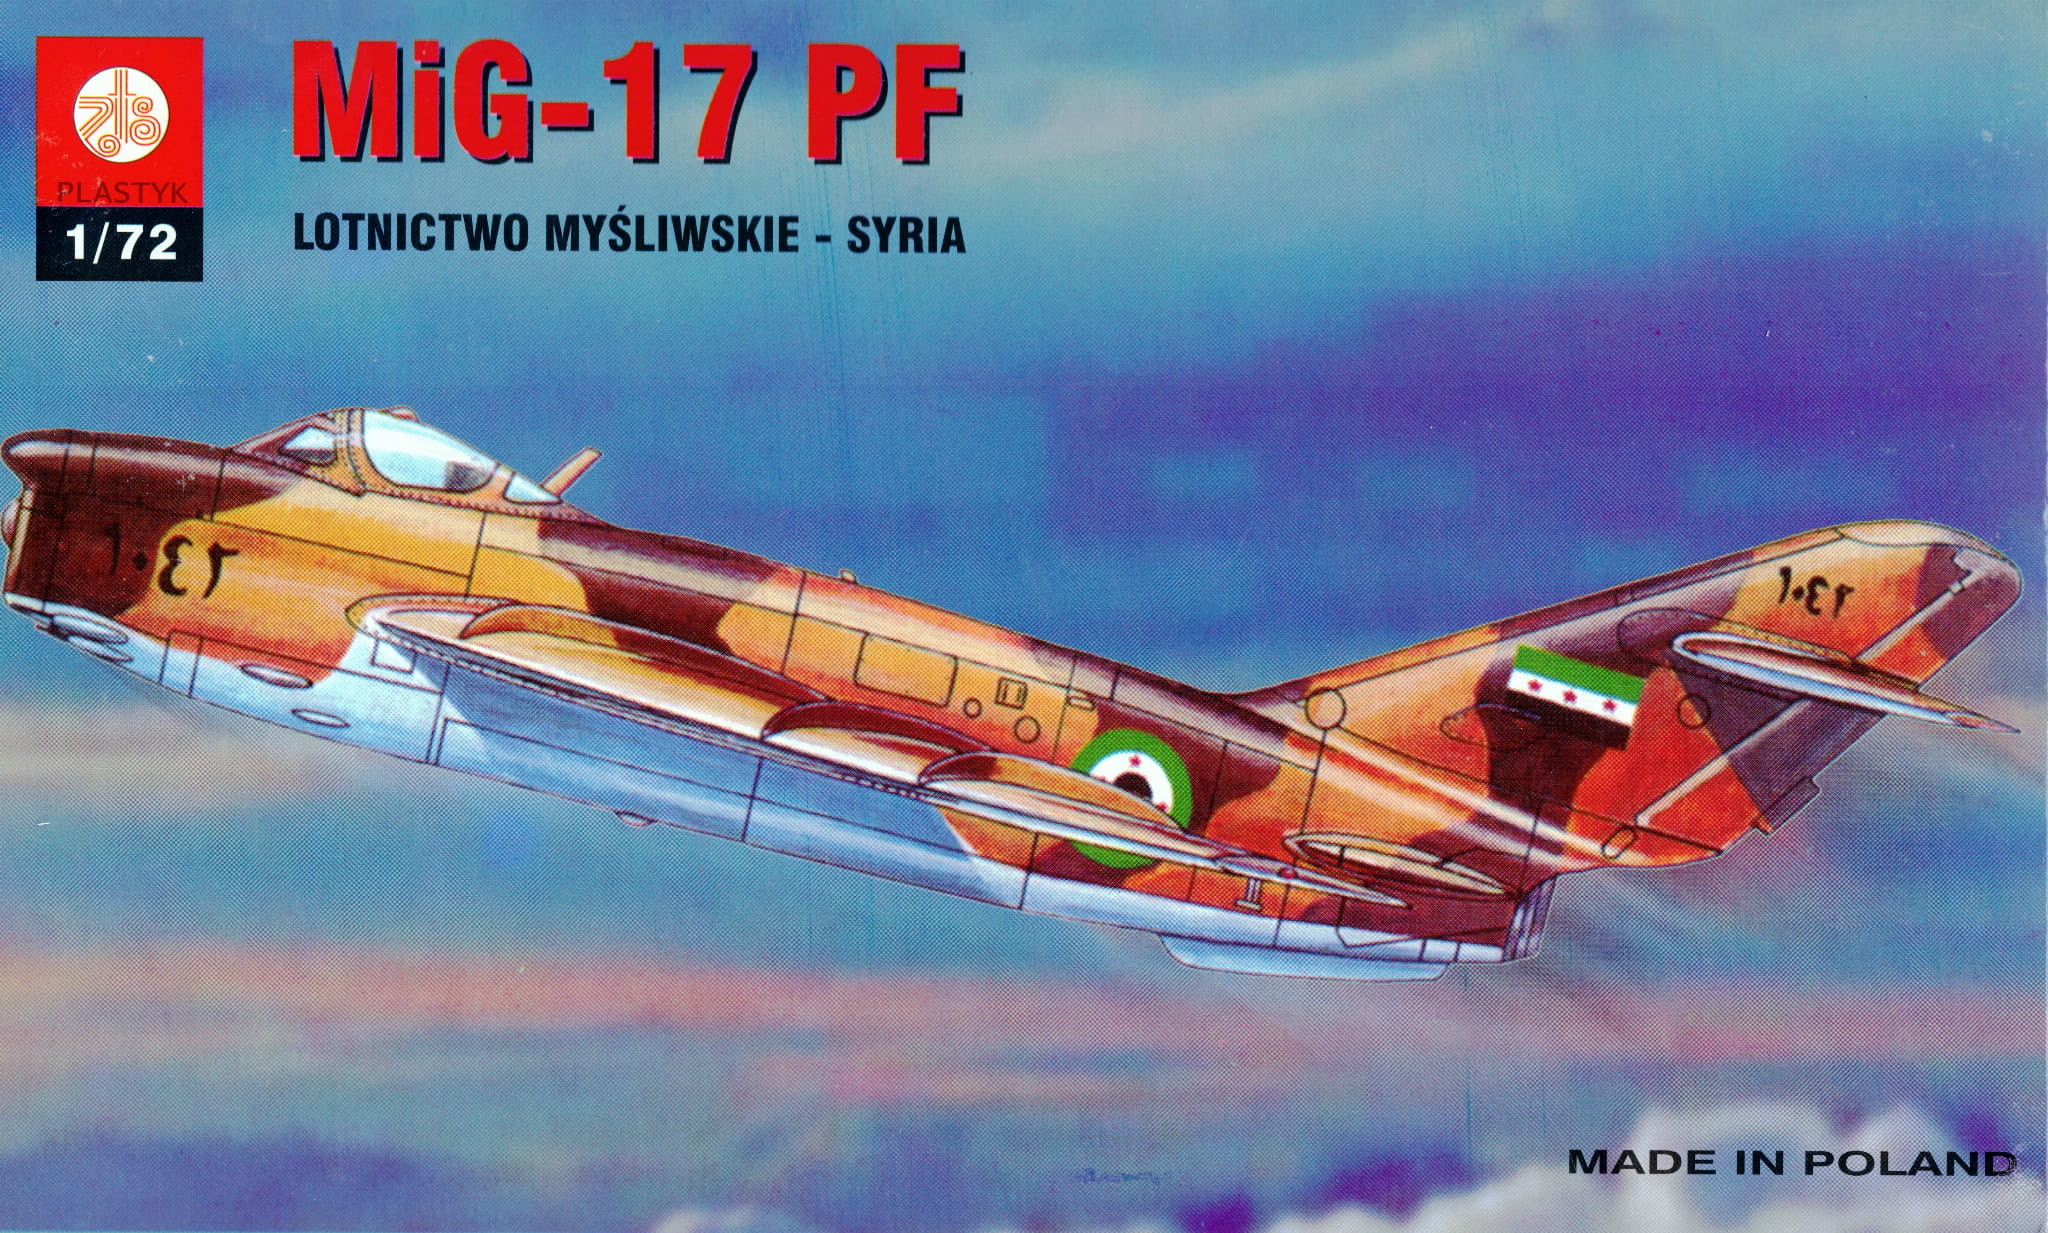 Plastyk ZPT Model SAMOLOTUMig-17 PF Lotnictwo myśliwskie SYRIA